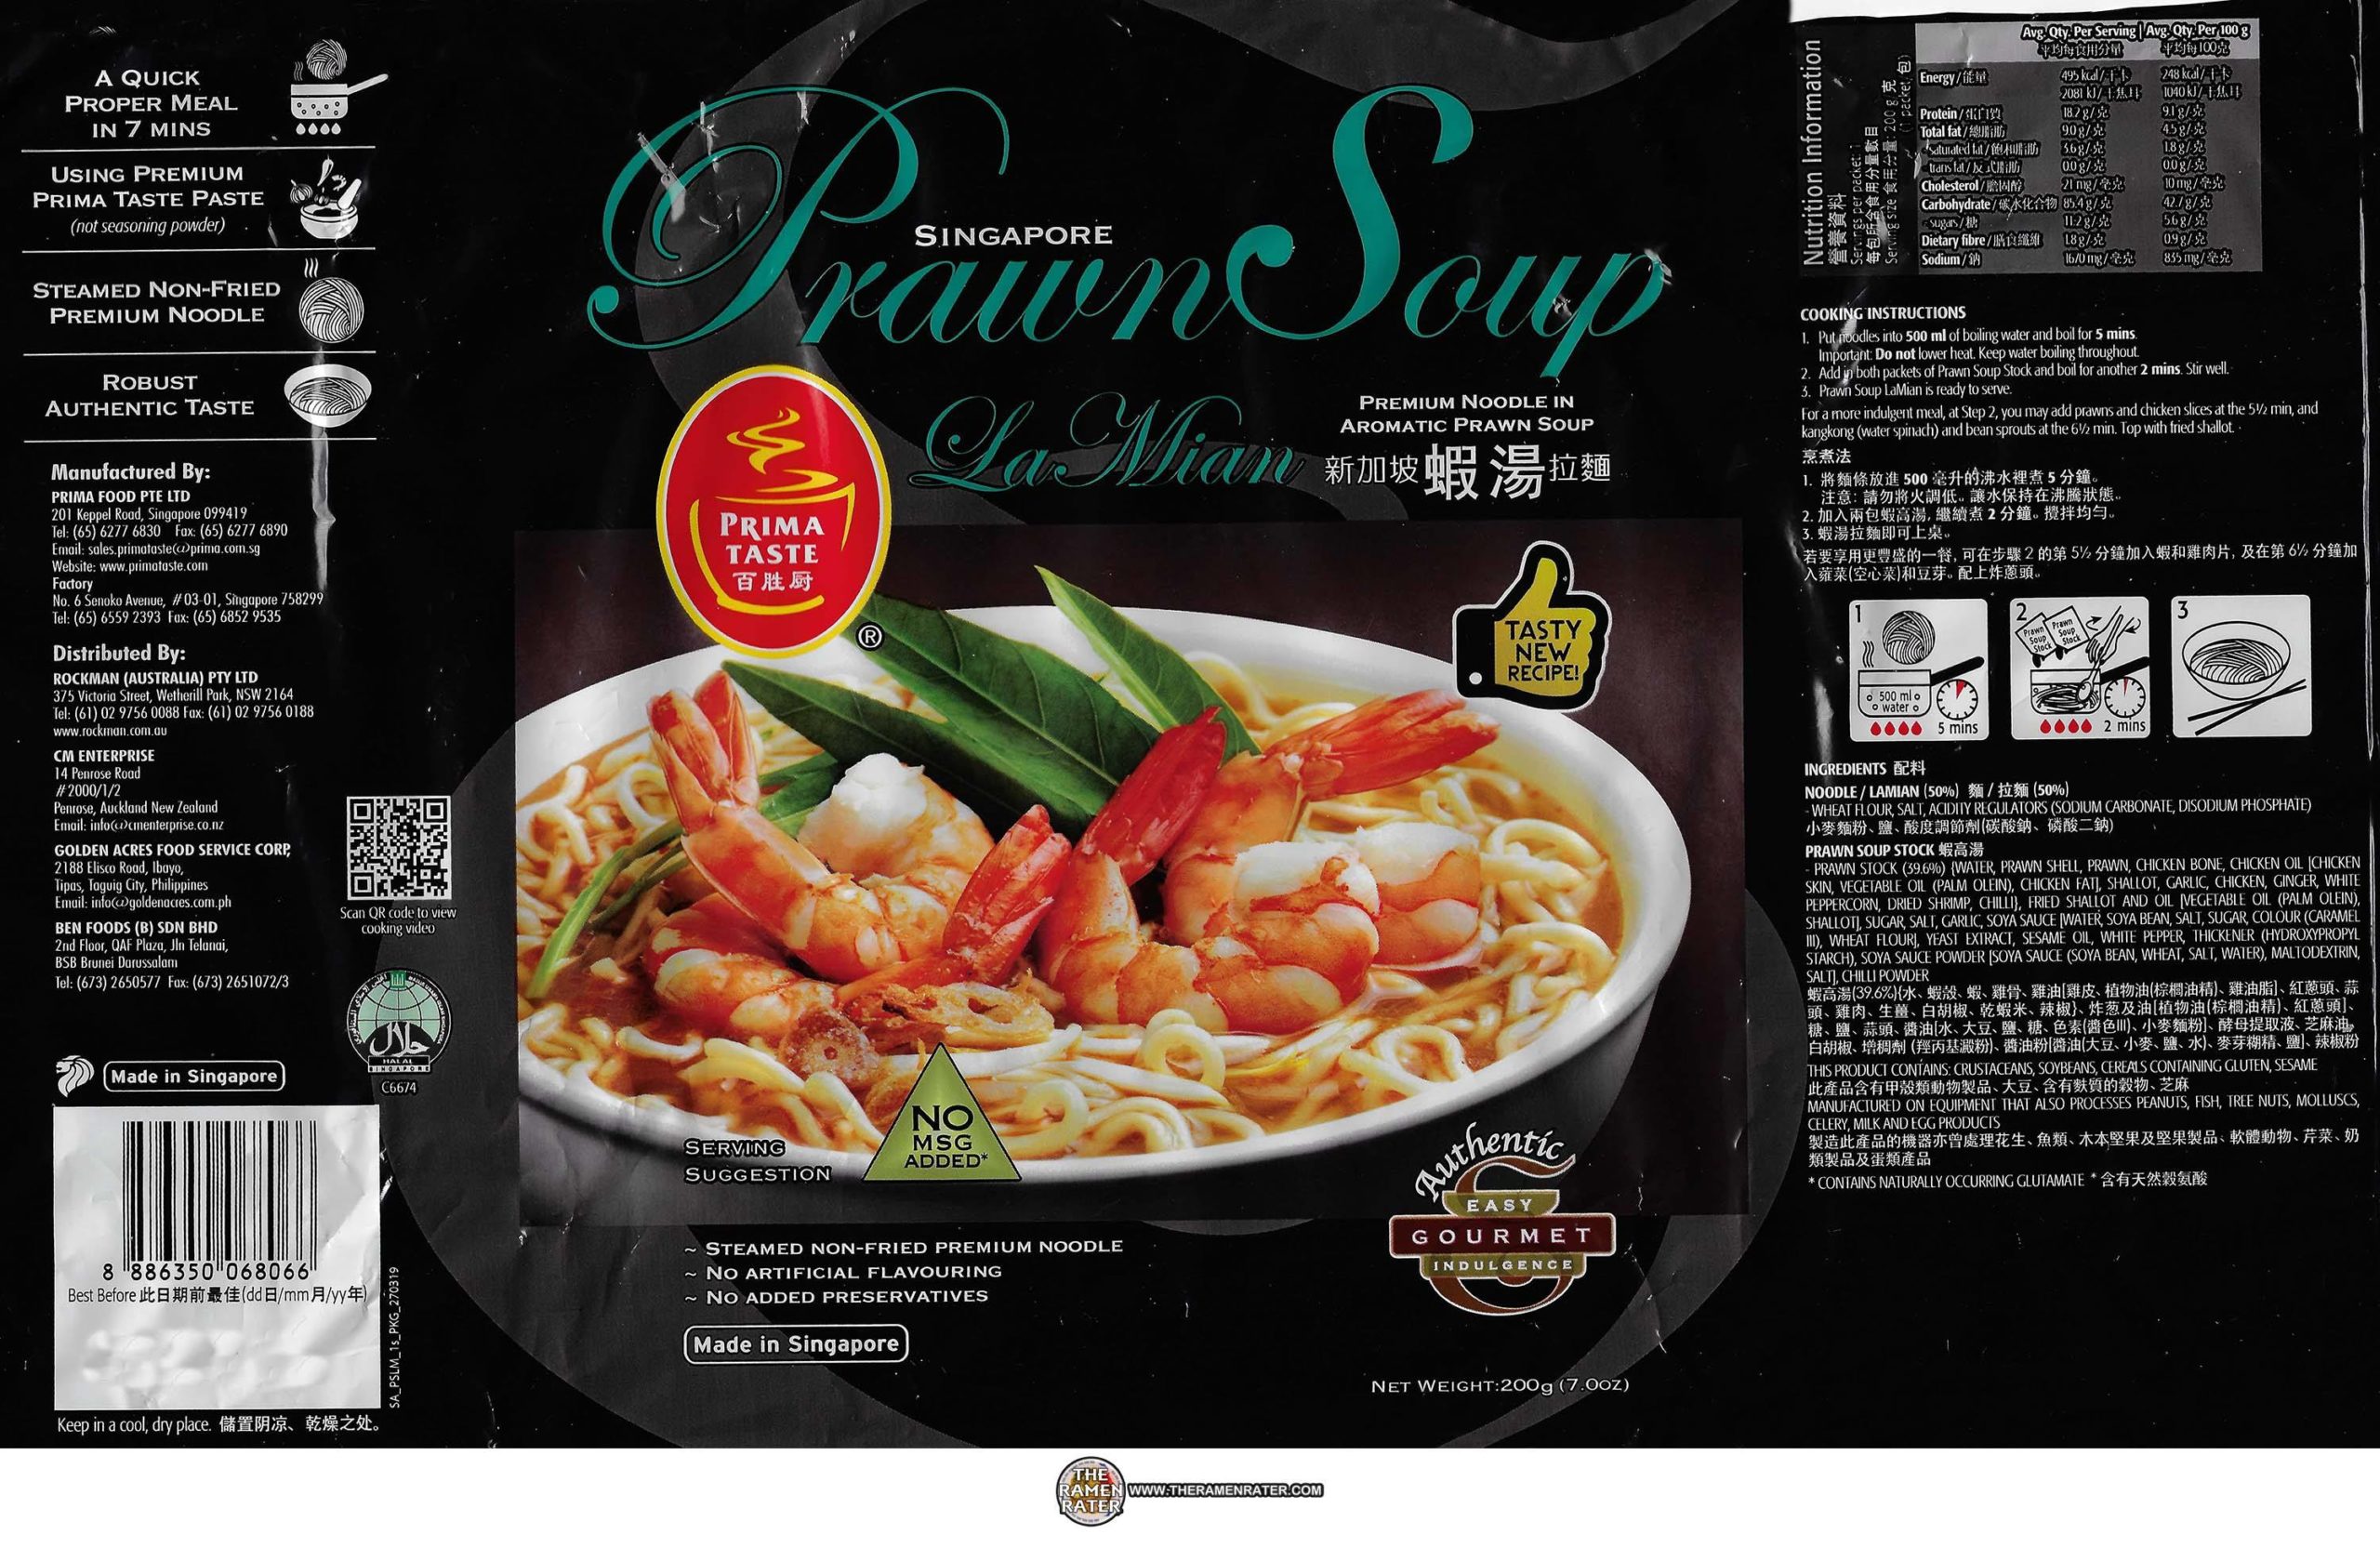 #3859: Prima Taste Singapore Prawn Soup La Mian - Singapore